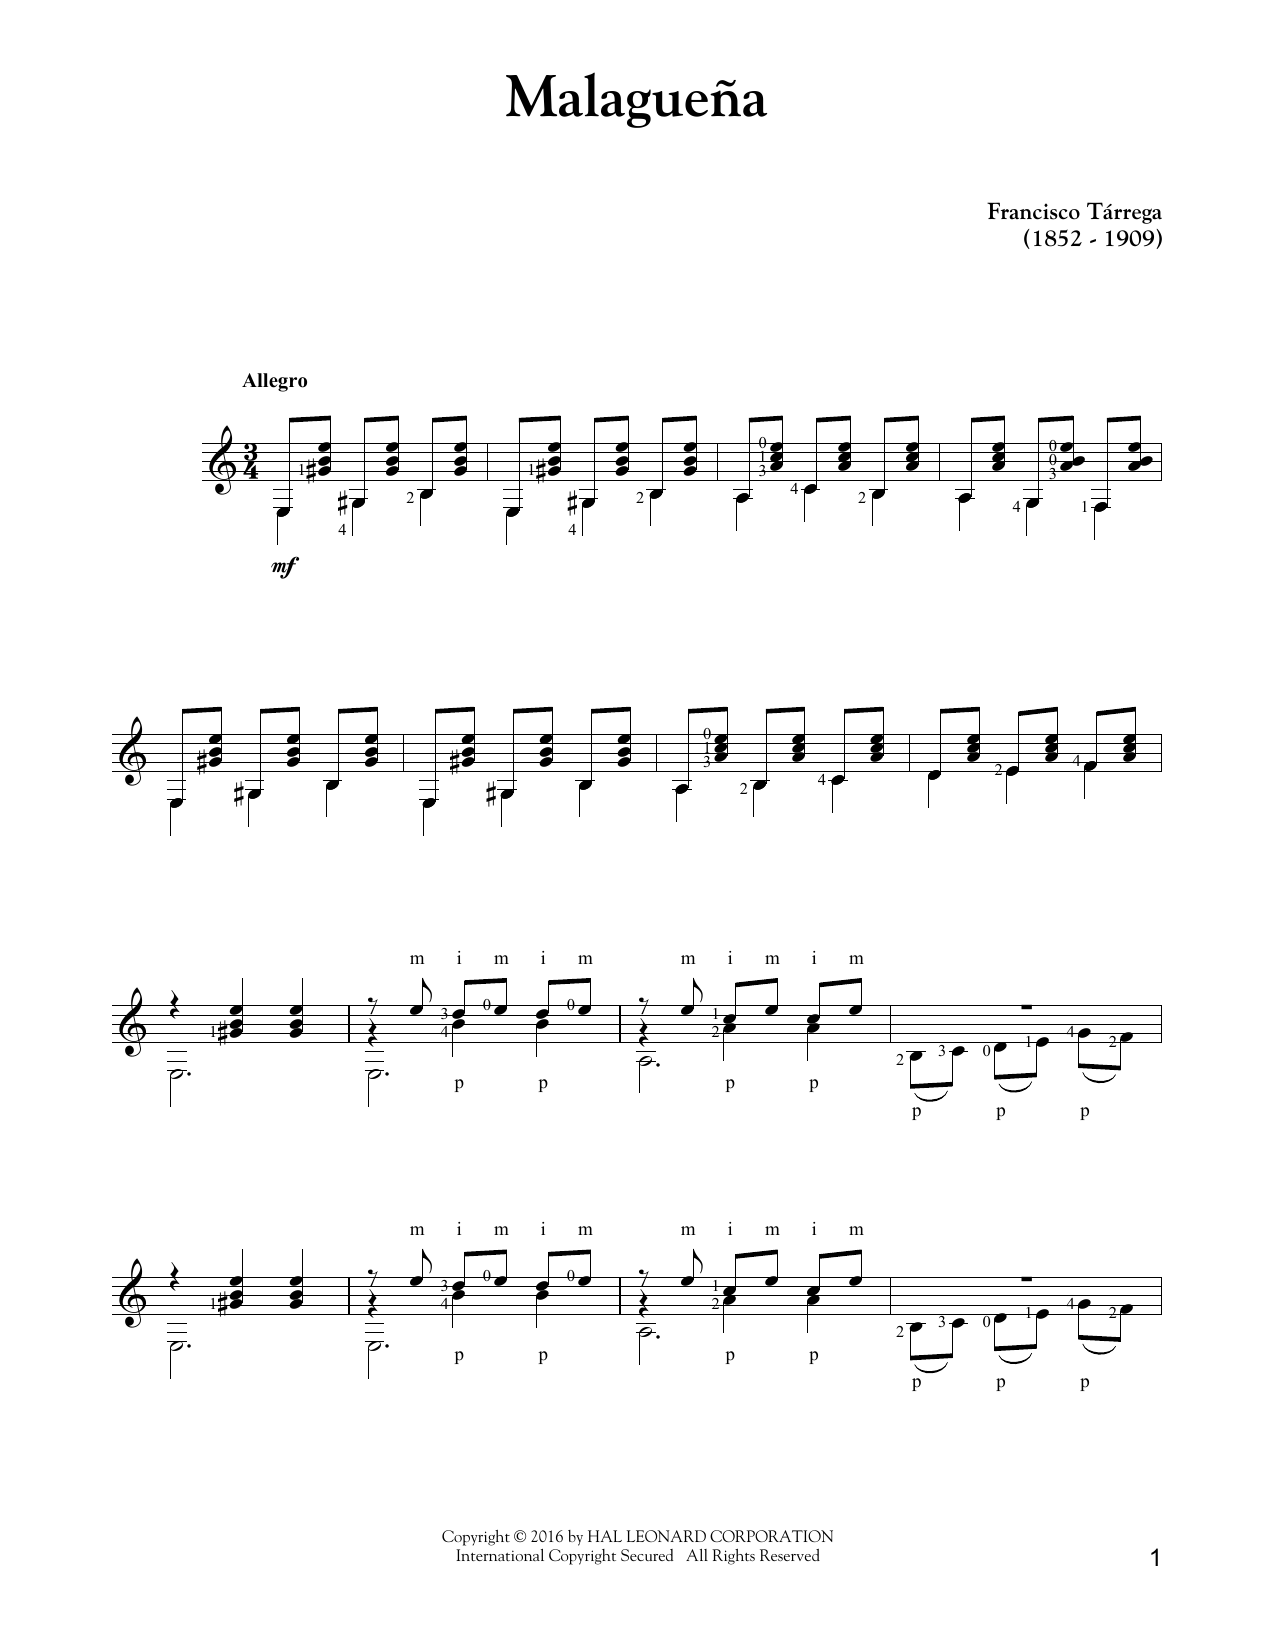 Francisco Tárrega Malagueña Sheet Music Notes & Chords for Guitar Tab - Download or Print PDF